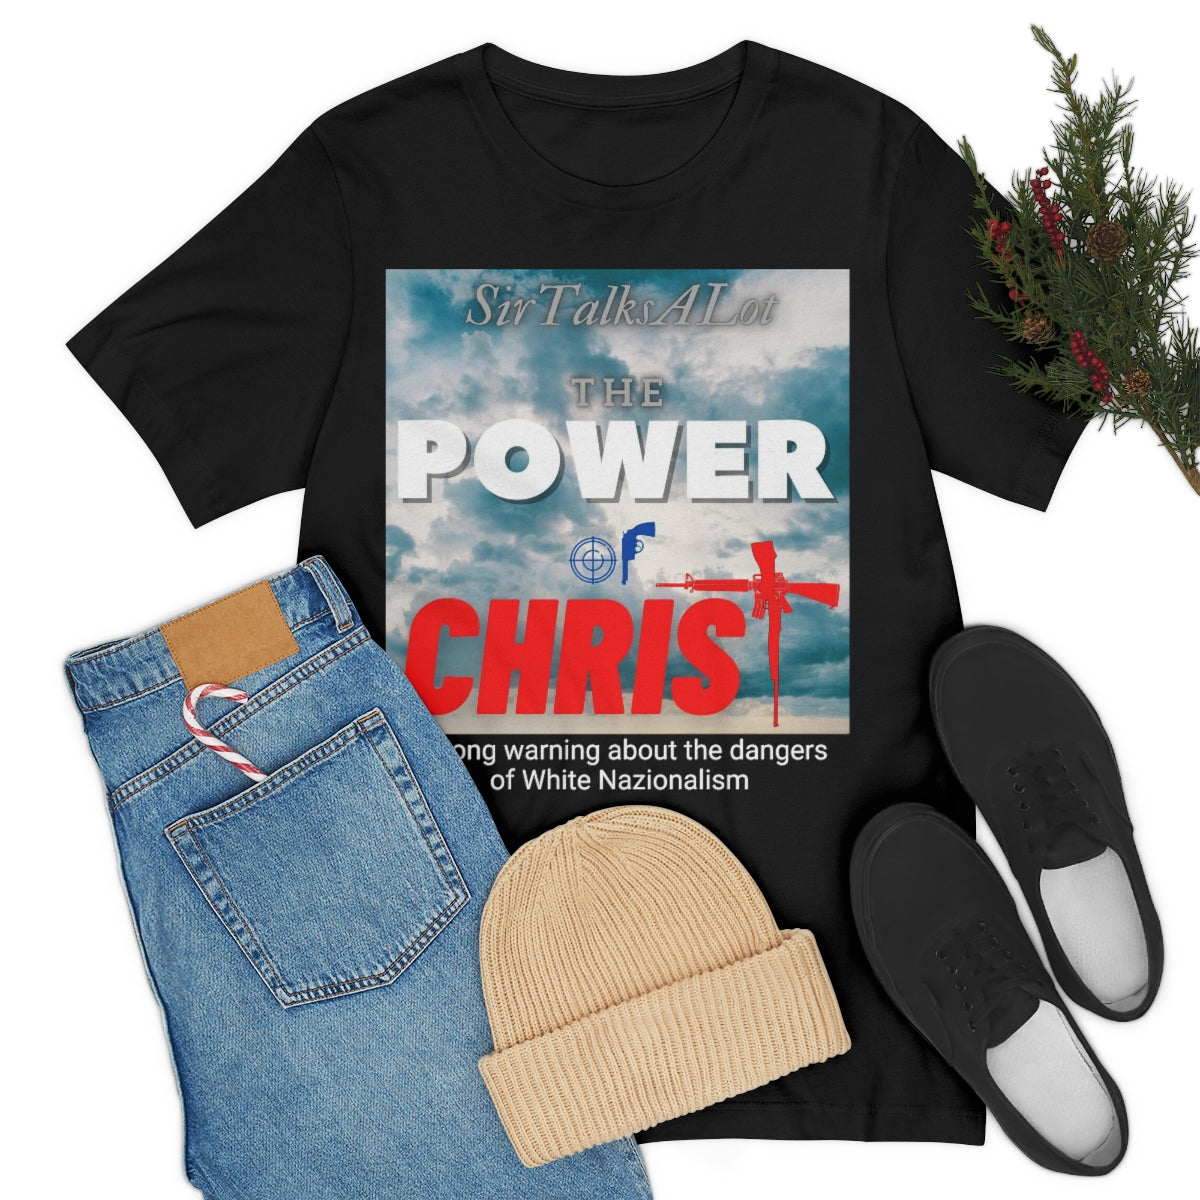 THE POWER OF CHRIST by SIRTALKSALOT Unisex Jersey Short Sleeve Black Tee (SirTalksALot Exclusive)